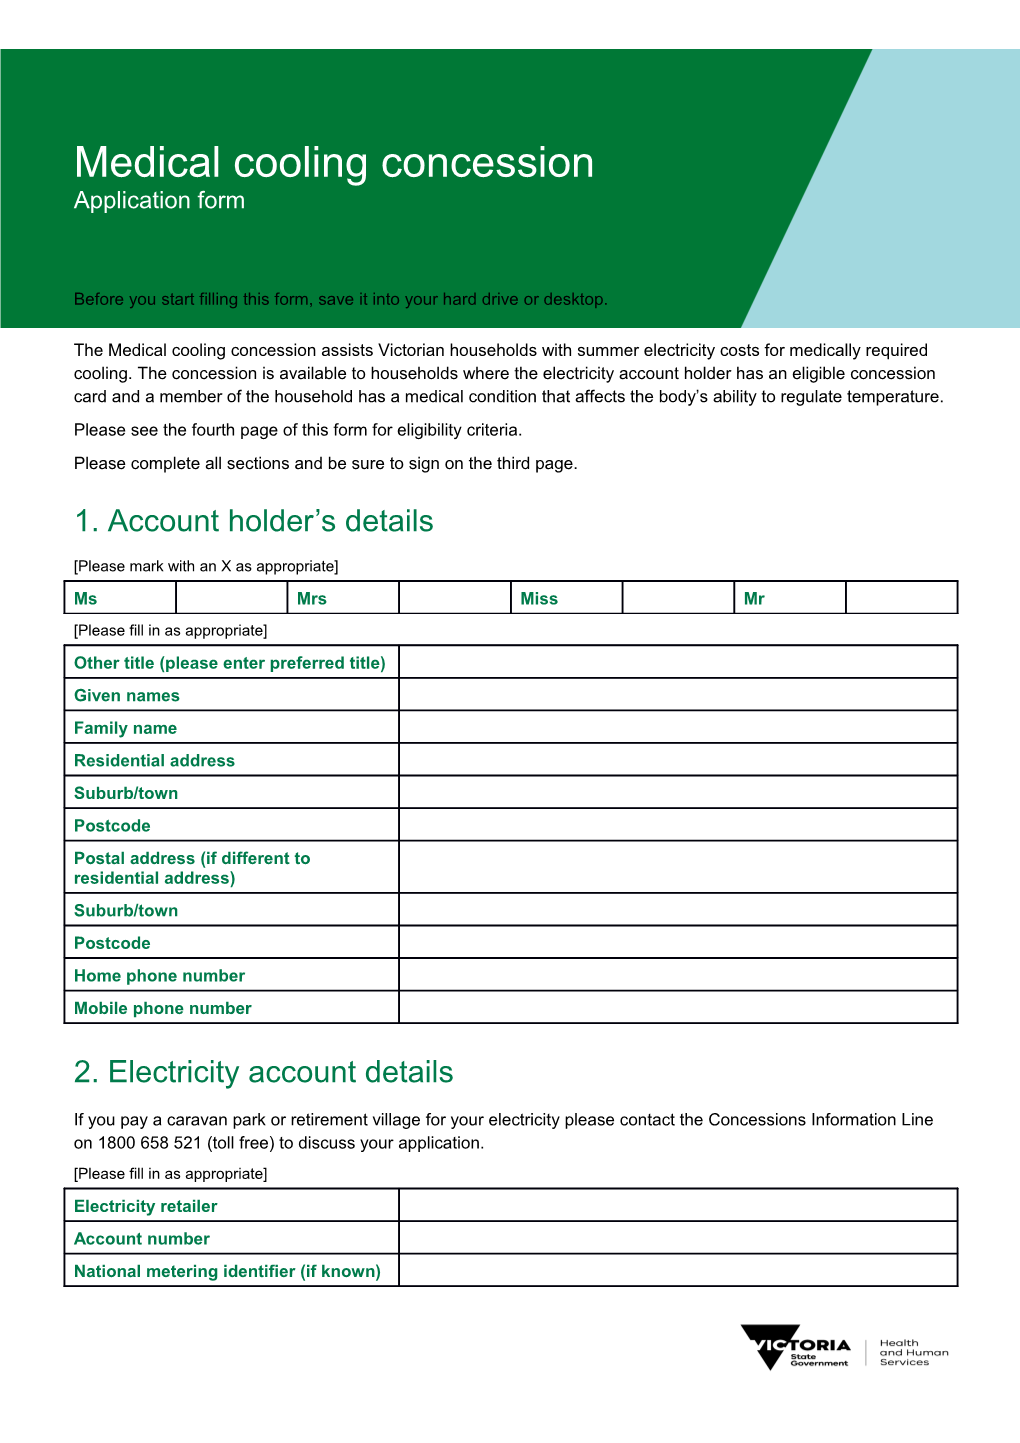 Medical Cooling Concession Application Form